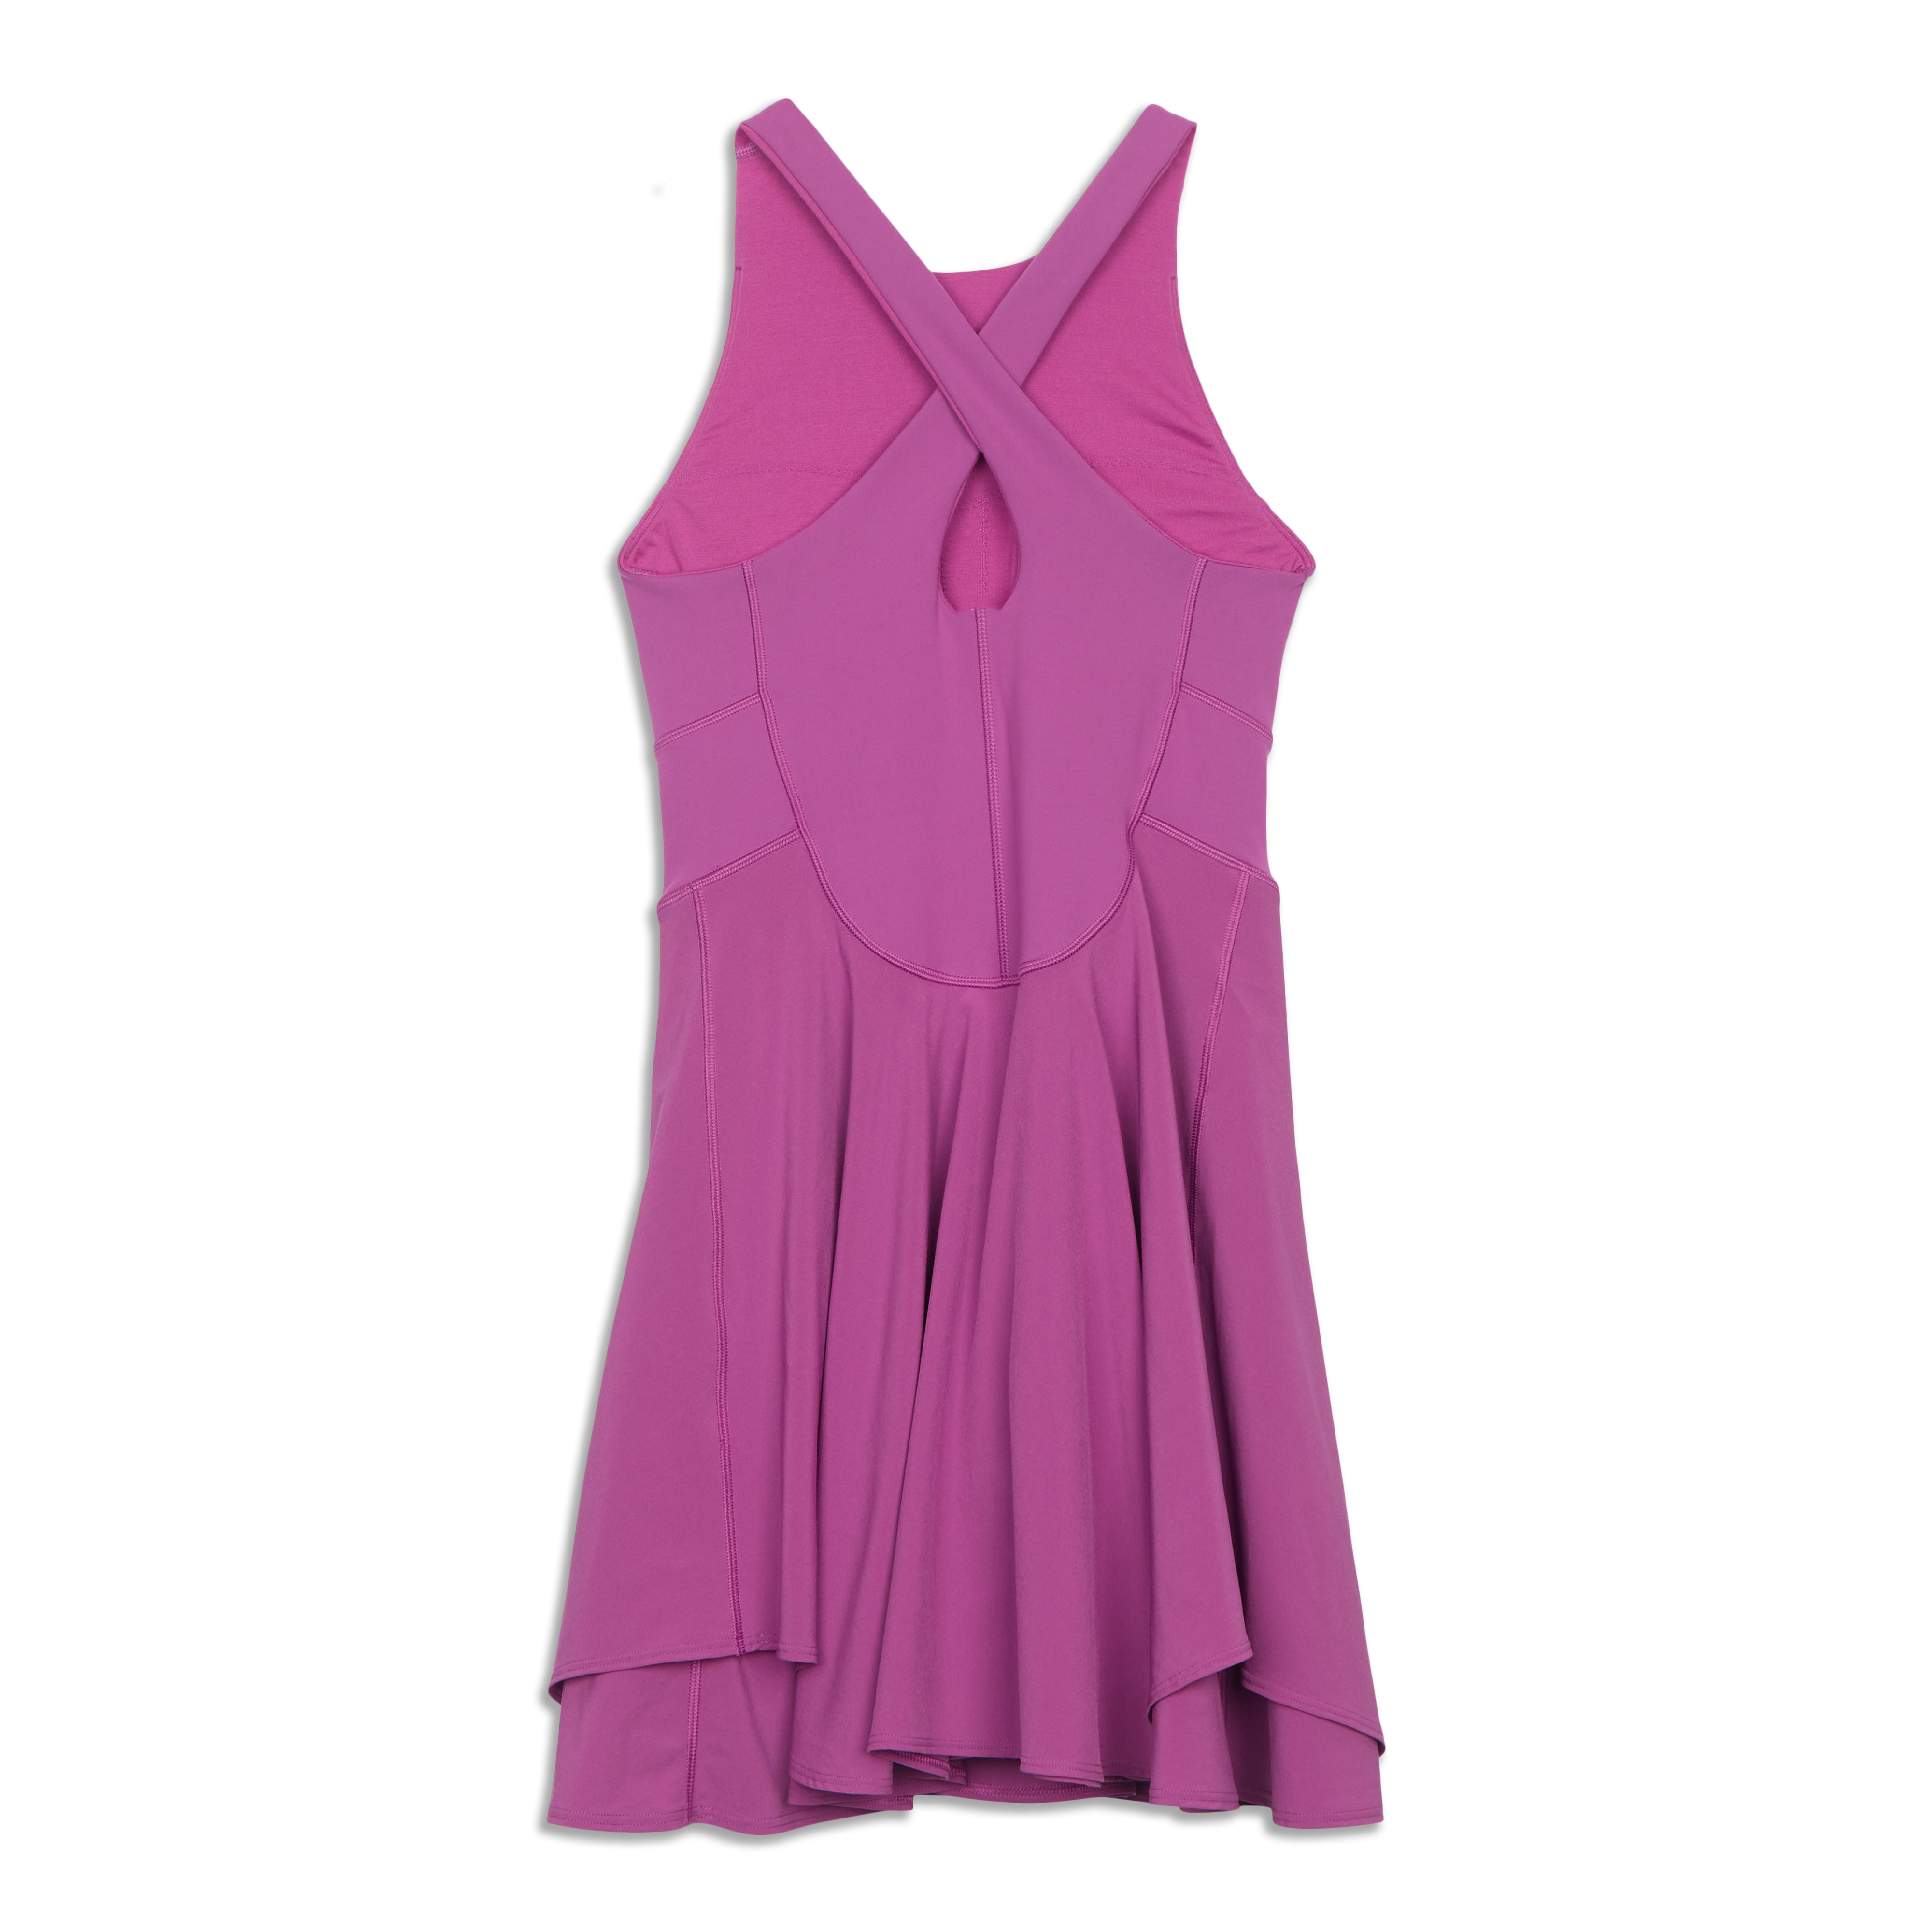 NWT lululemon womens 2 purple charged indigo court crush tennis dress